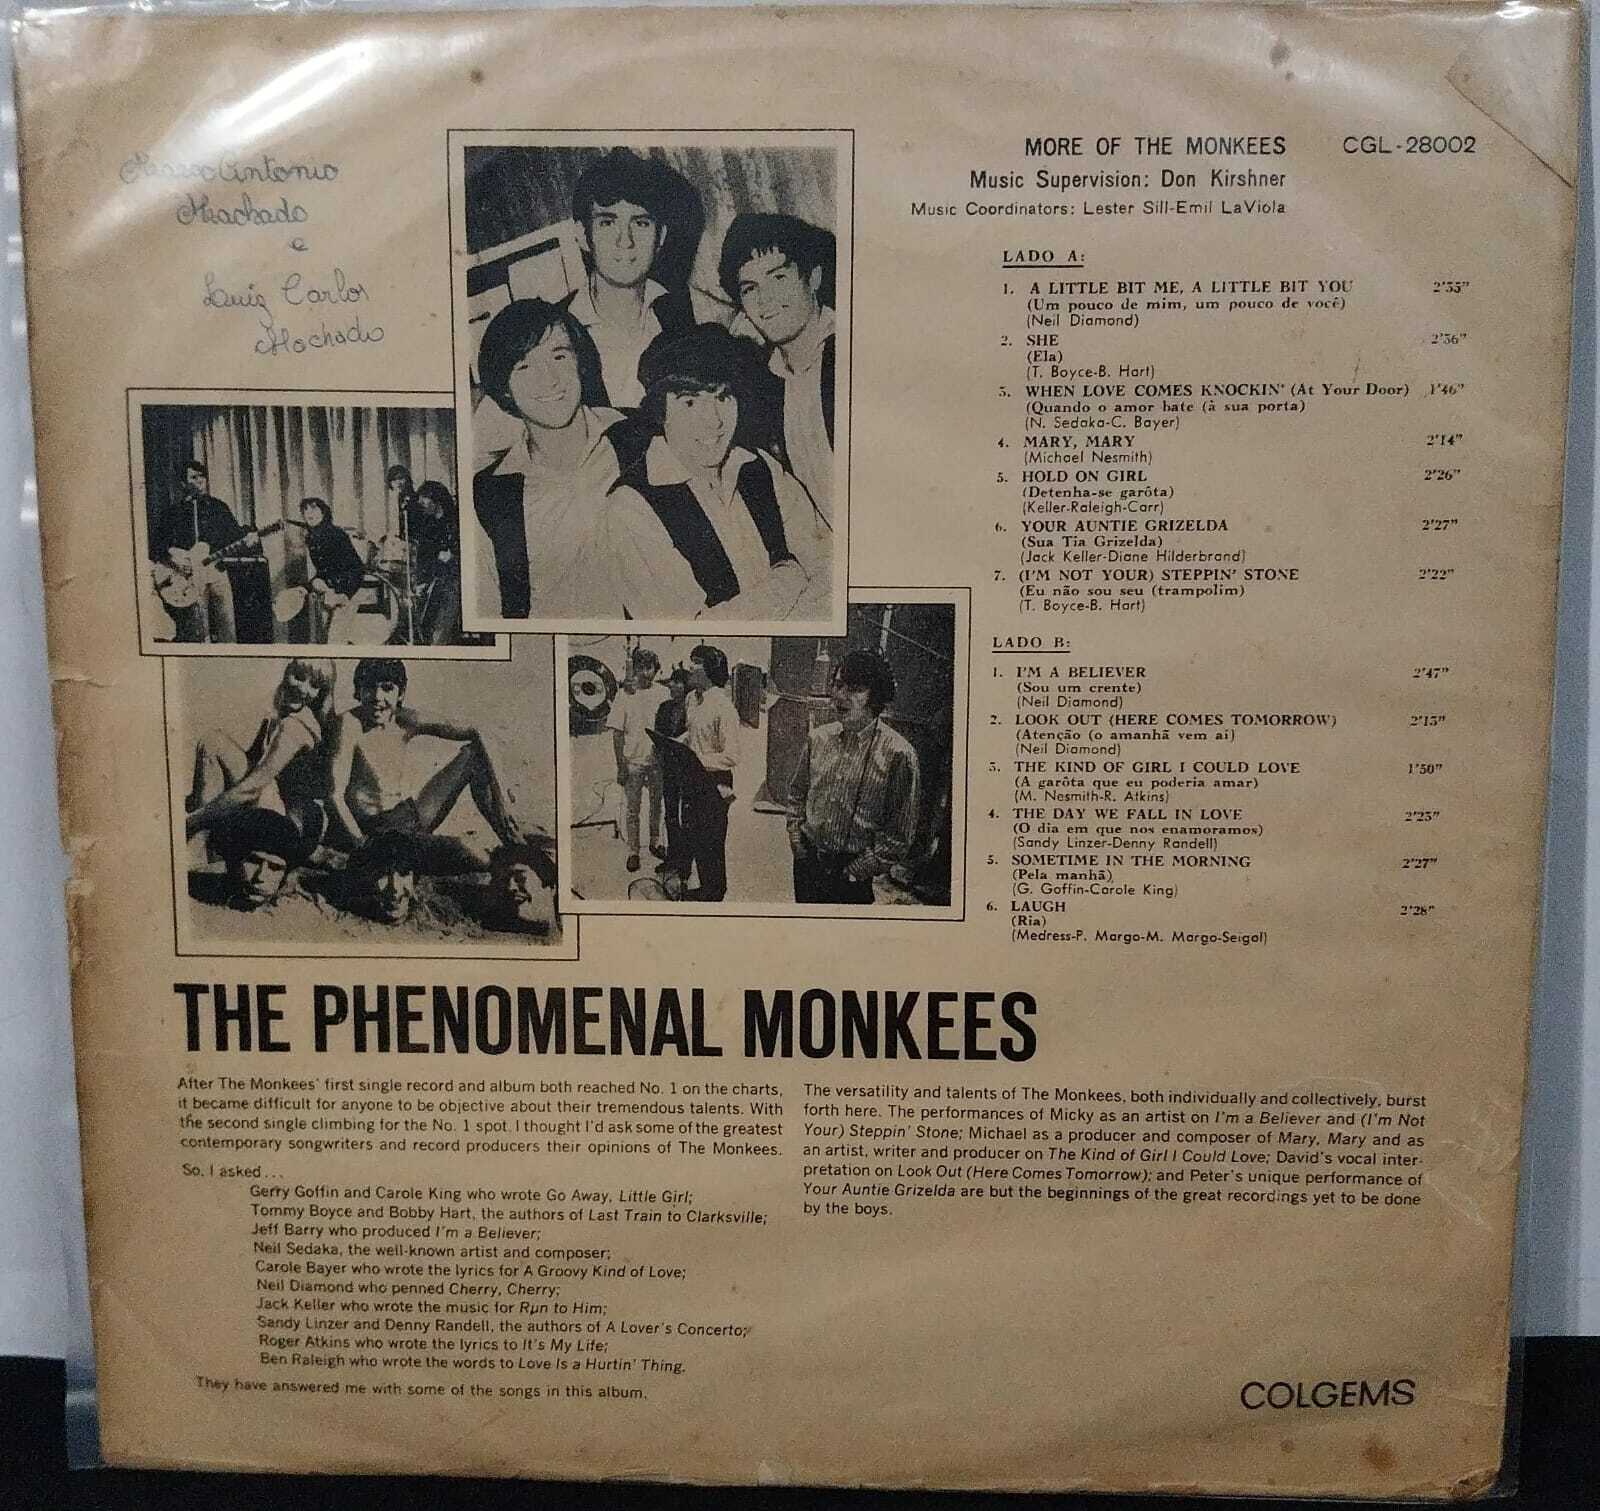 Vinil - Monkees The - More Of